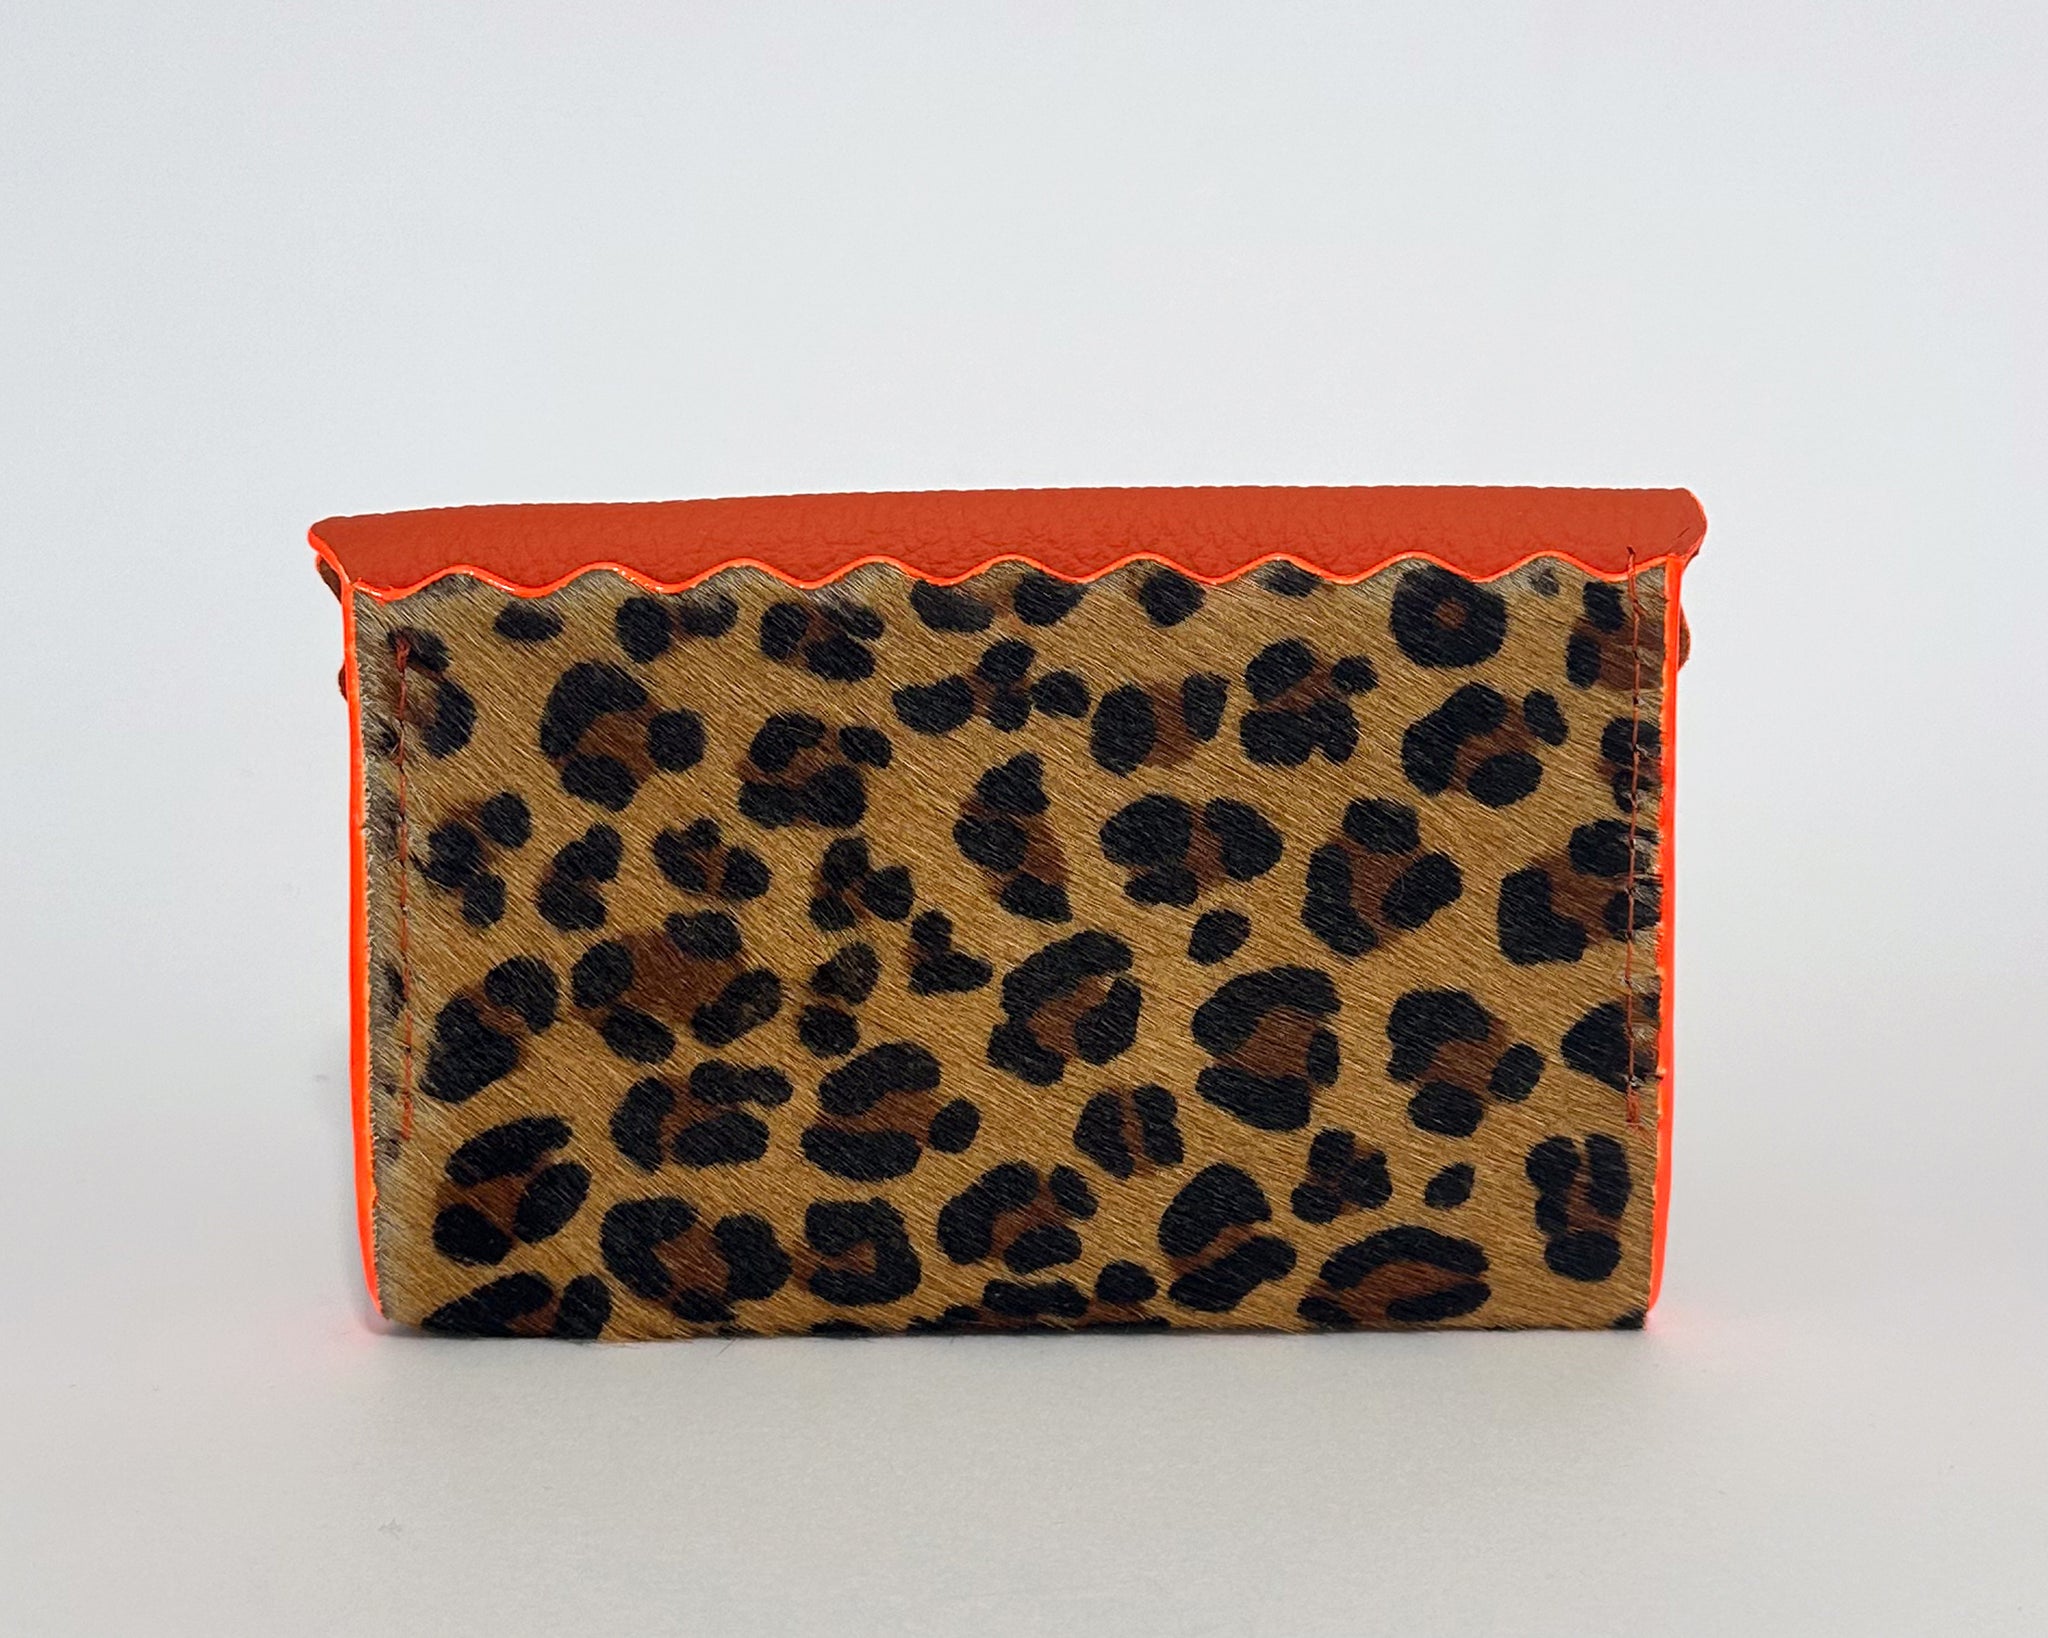 3 Pieces Leopard Print Cosmetic Bag Set Toiletry Travel Makeup Pouch  Portable Makeup Bag Brush Organizer Purse Handbag for Women : Amazon.in:  Beauty